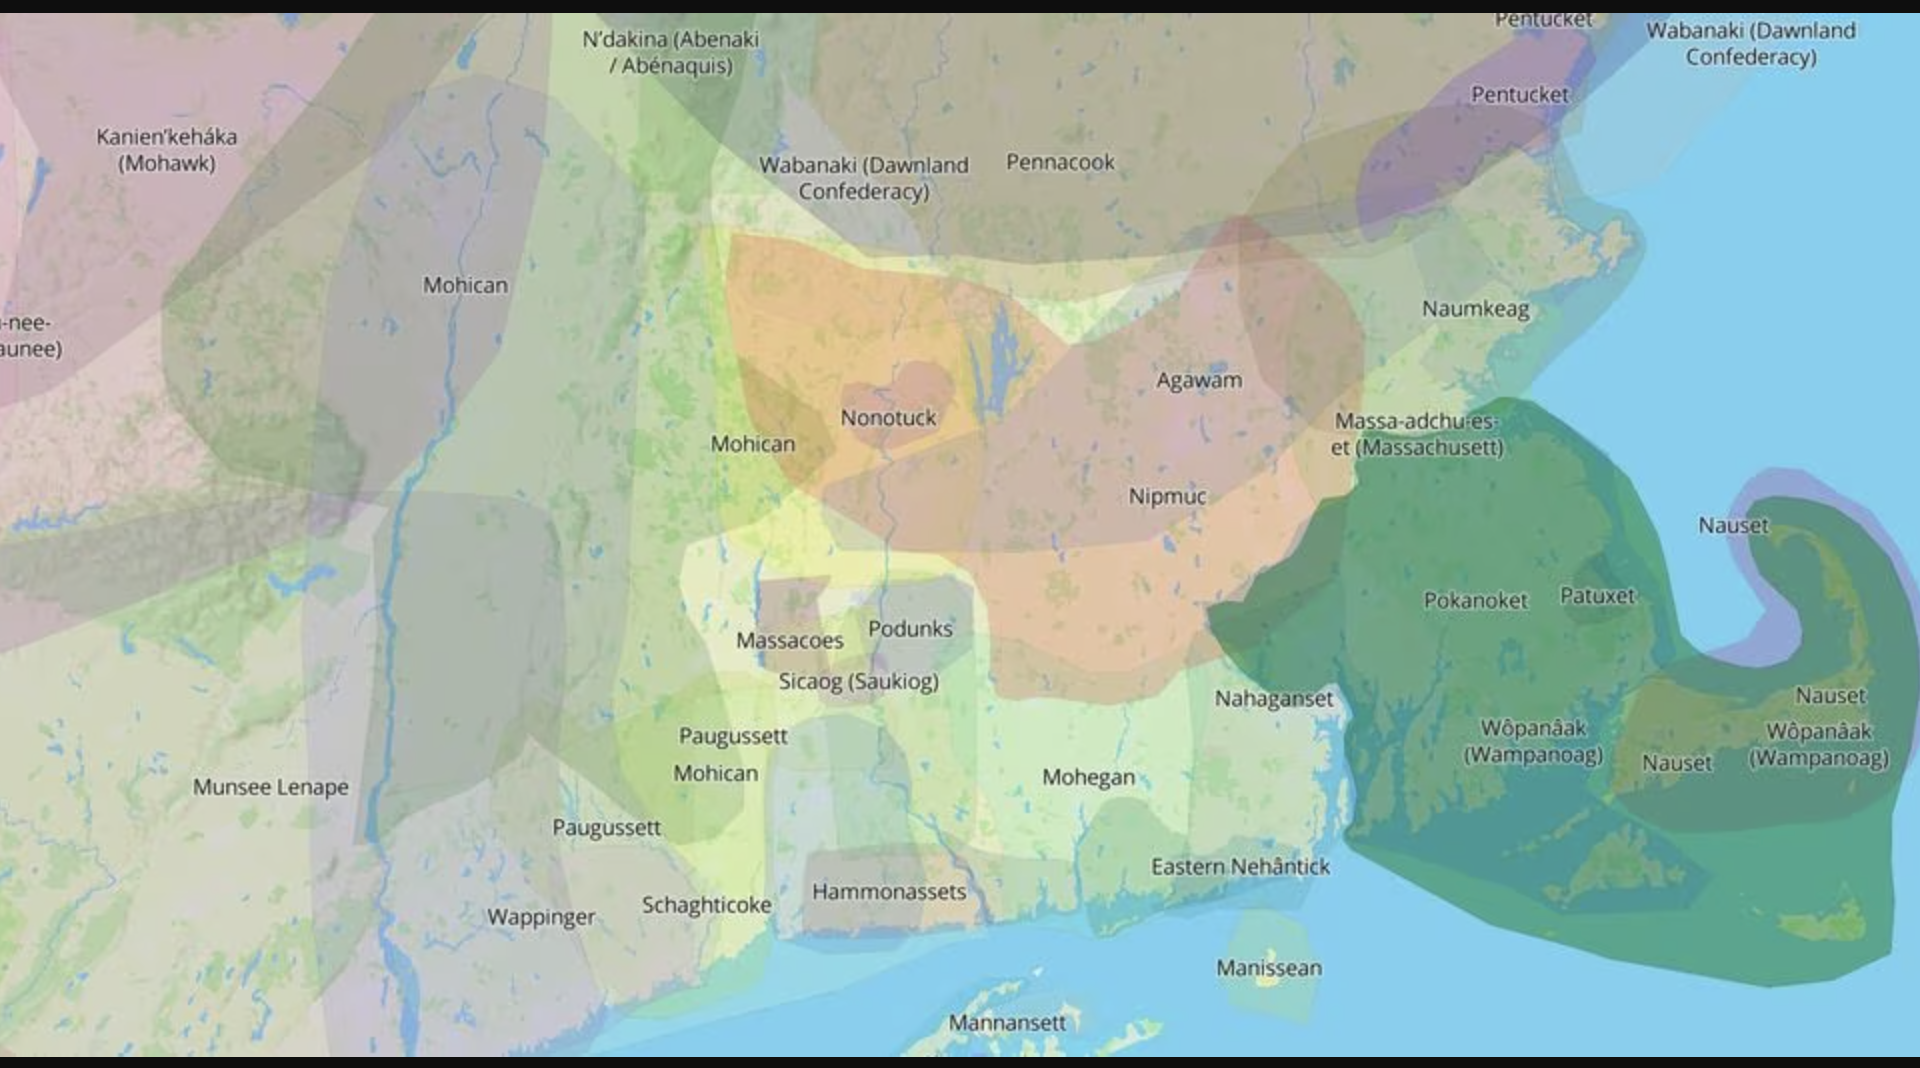 Indigenous lands in Massachusetts. (Courtesy of Native Land Digital)